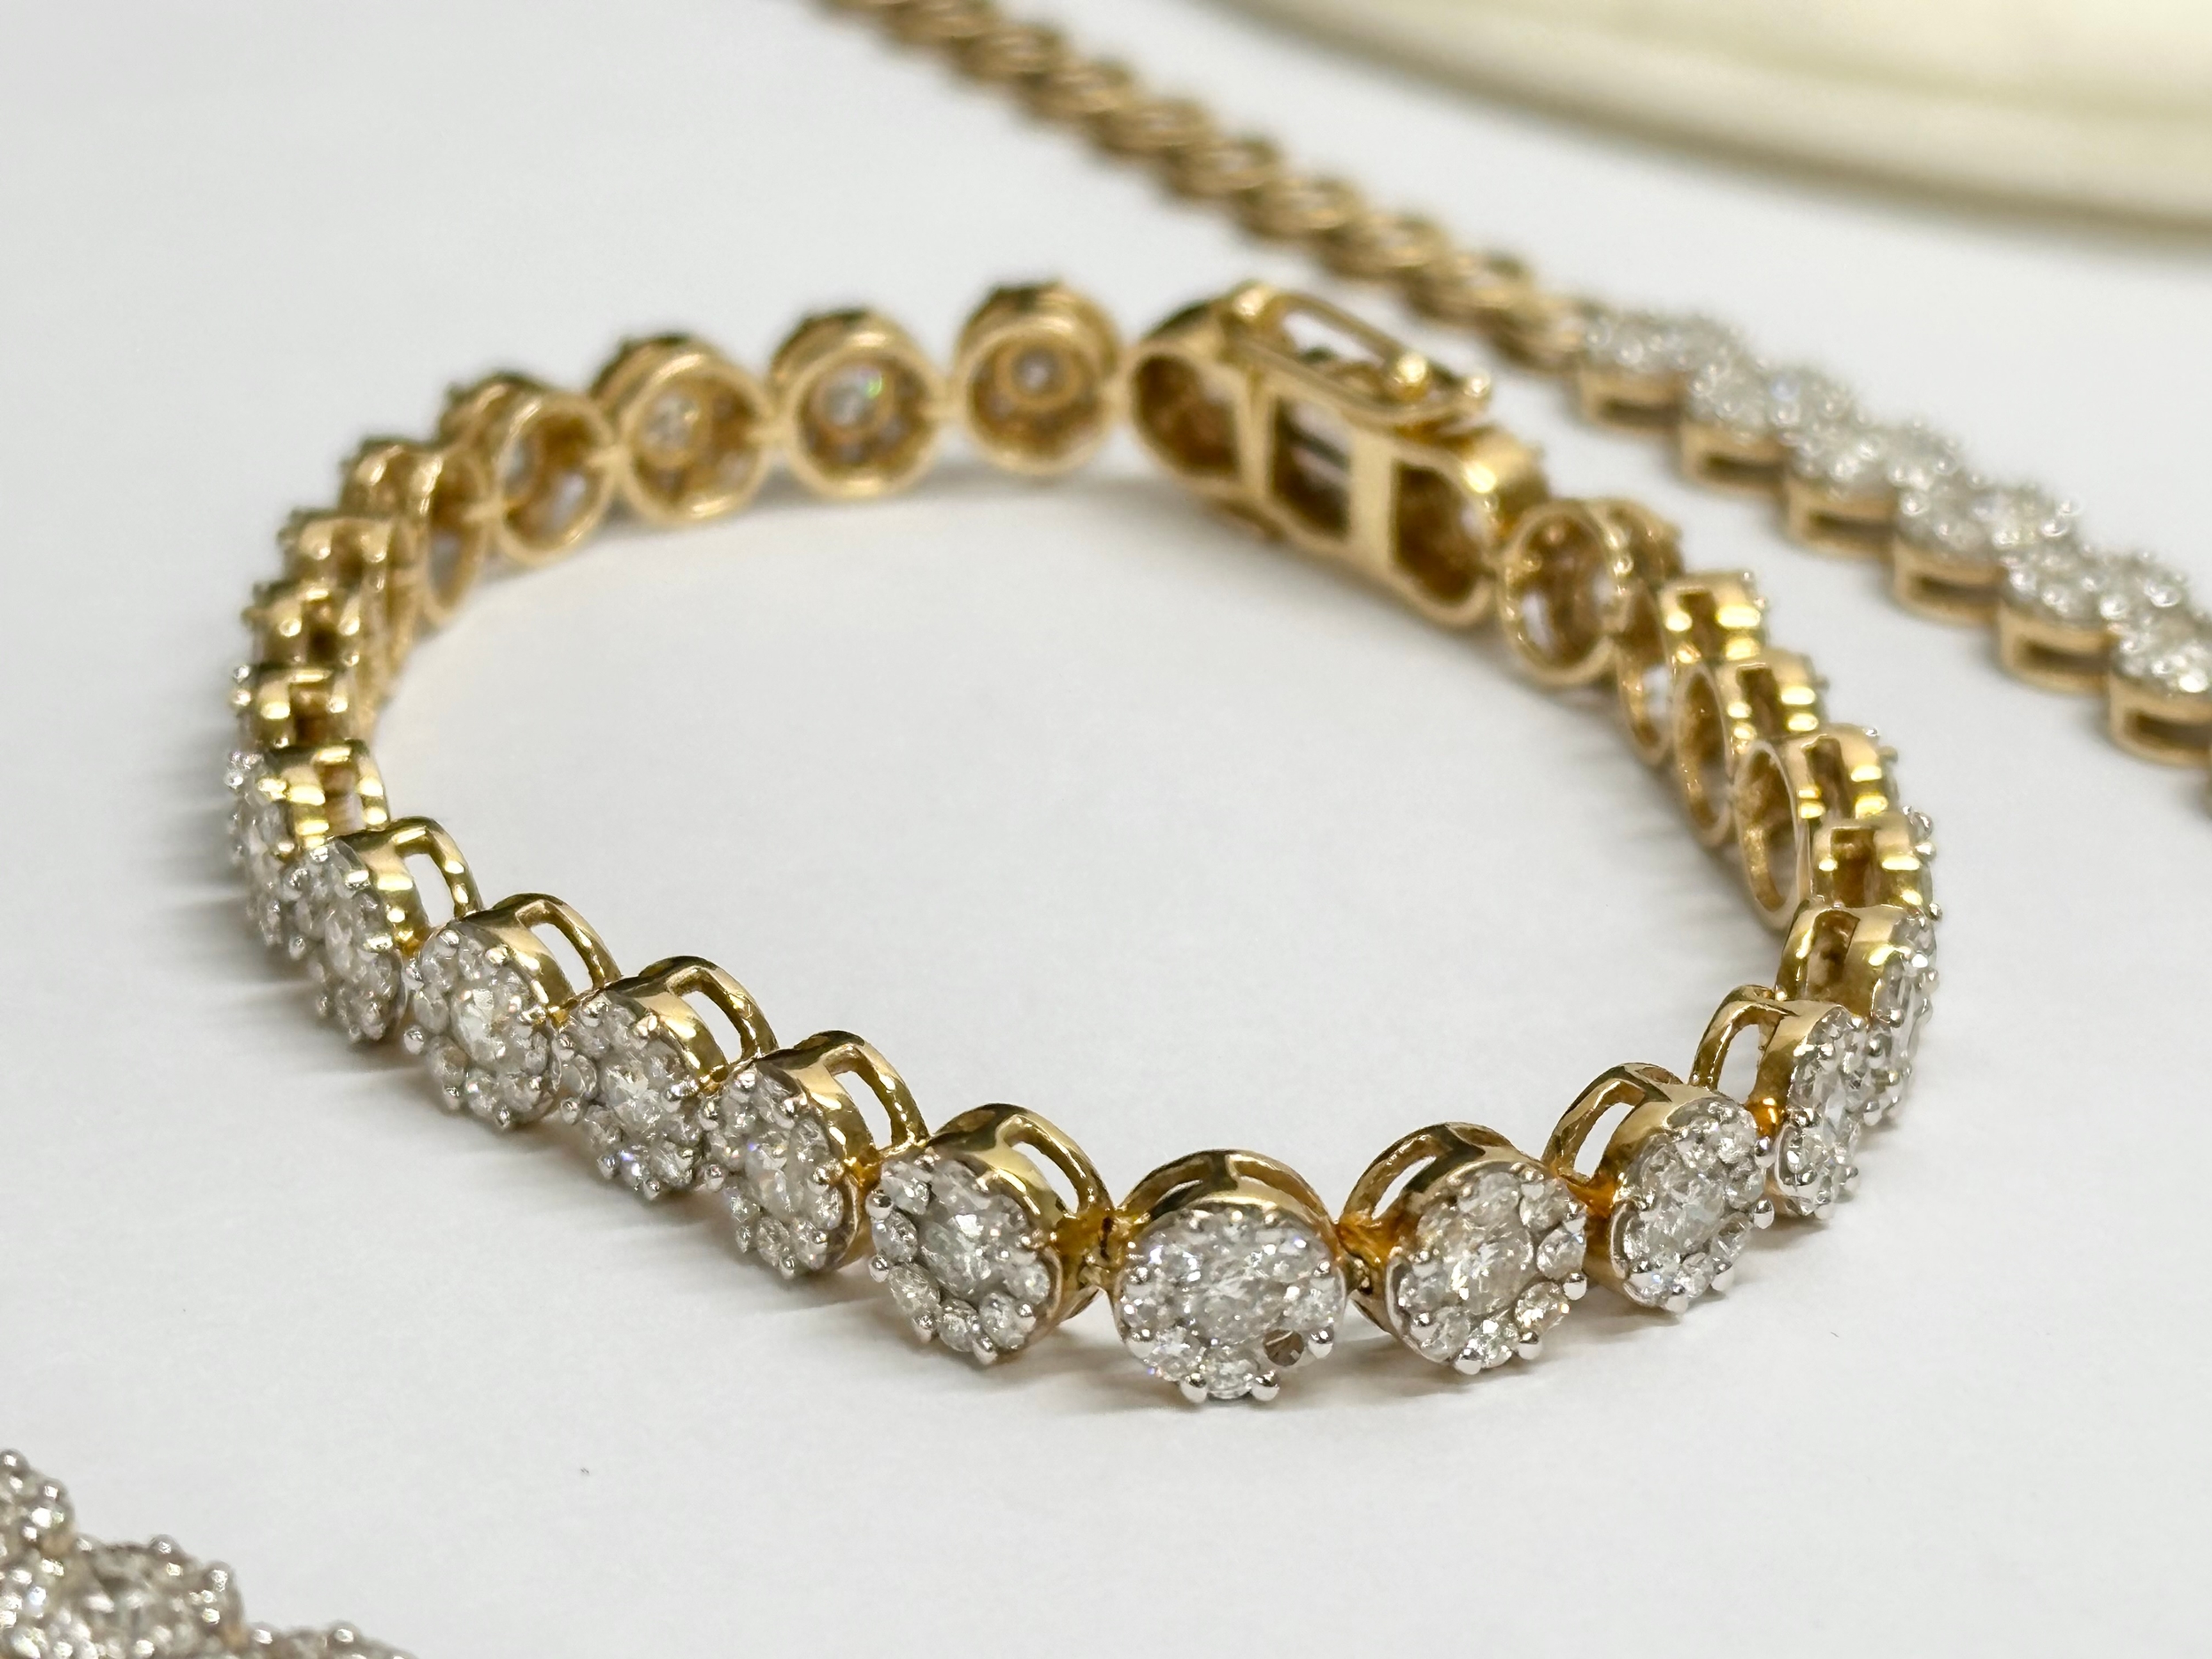 18ct gold and diamond set. 7ct Diamond necklace, 5ct diamond bracelet and matching ring. 48.3 grams - Image 3 of 6